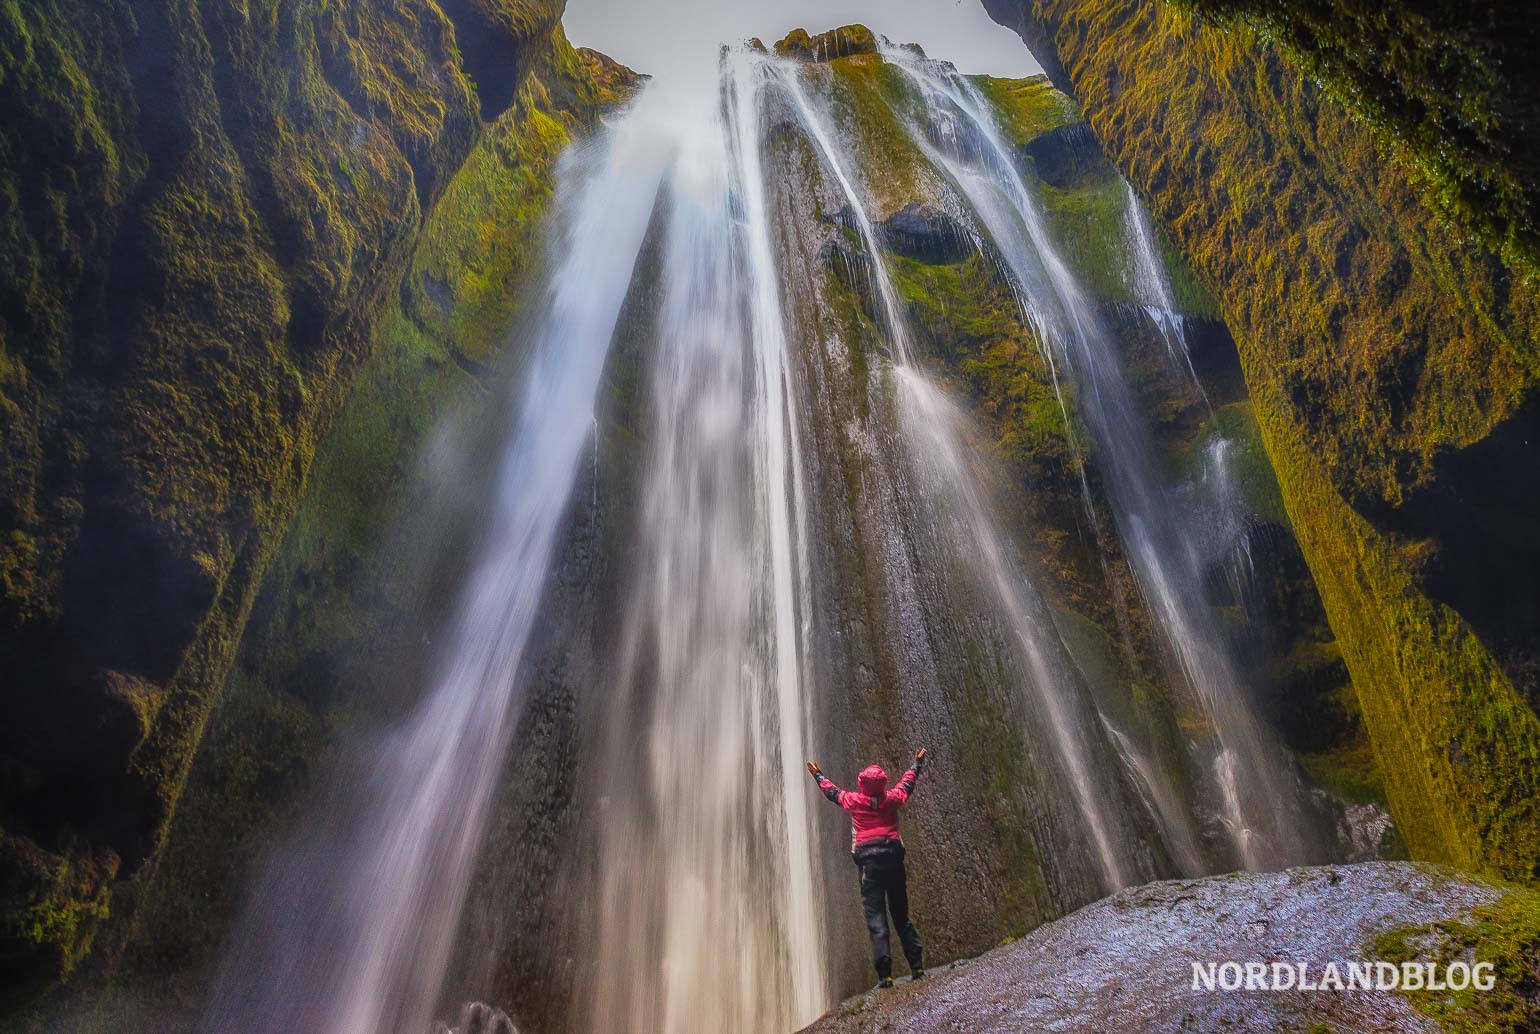 Wasserfall Gljúfrabúi in Island im Nordlandblog